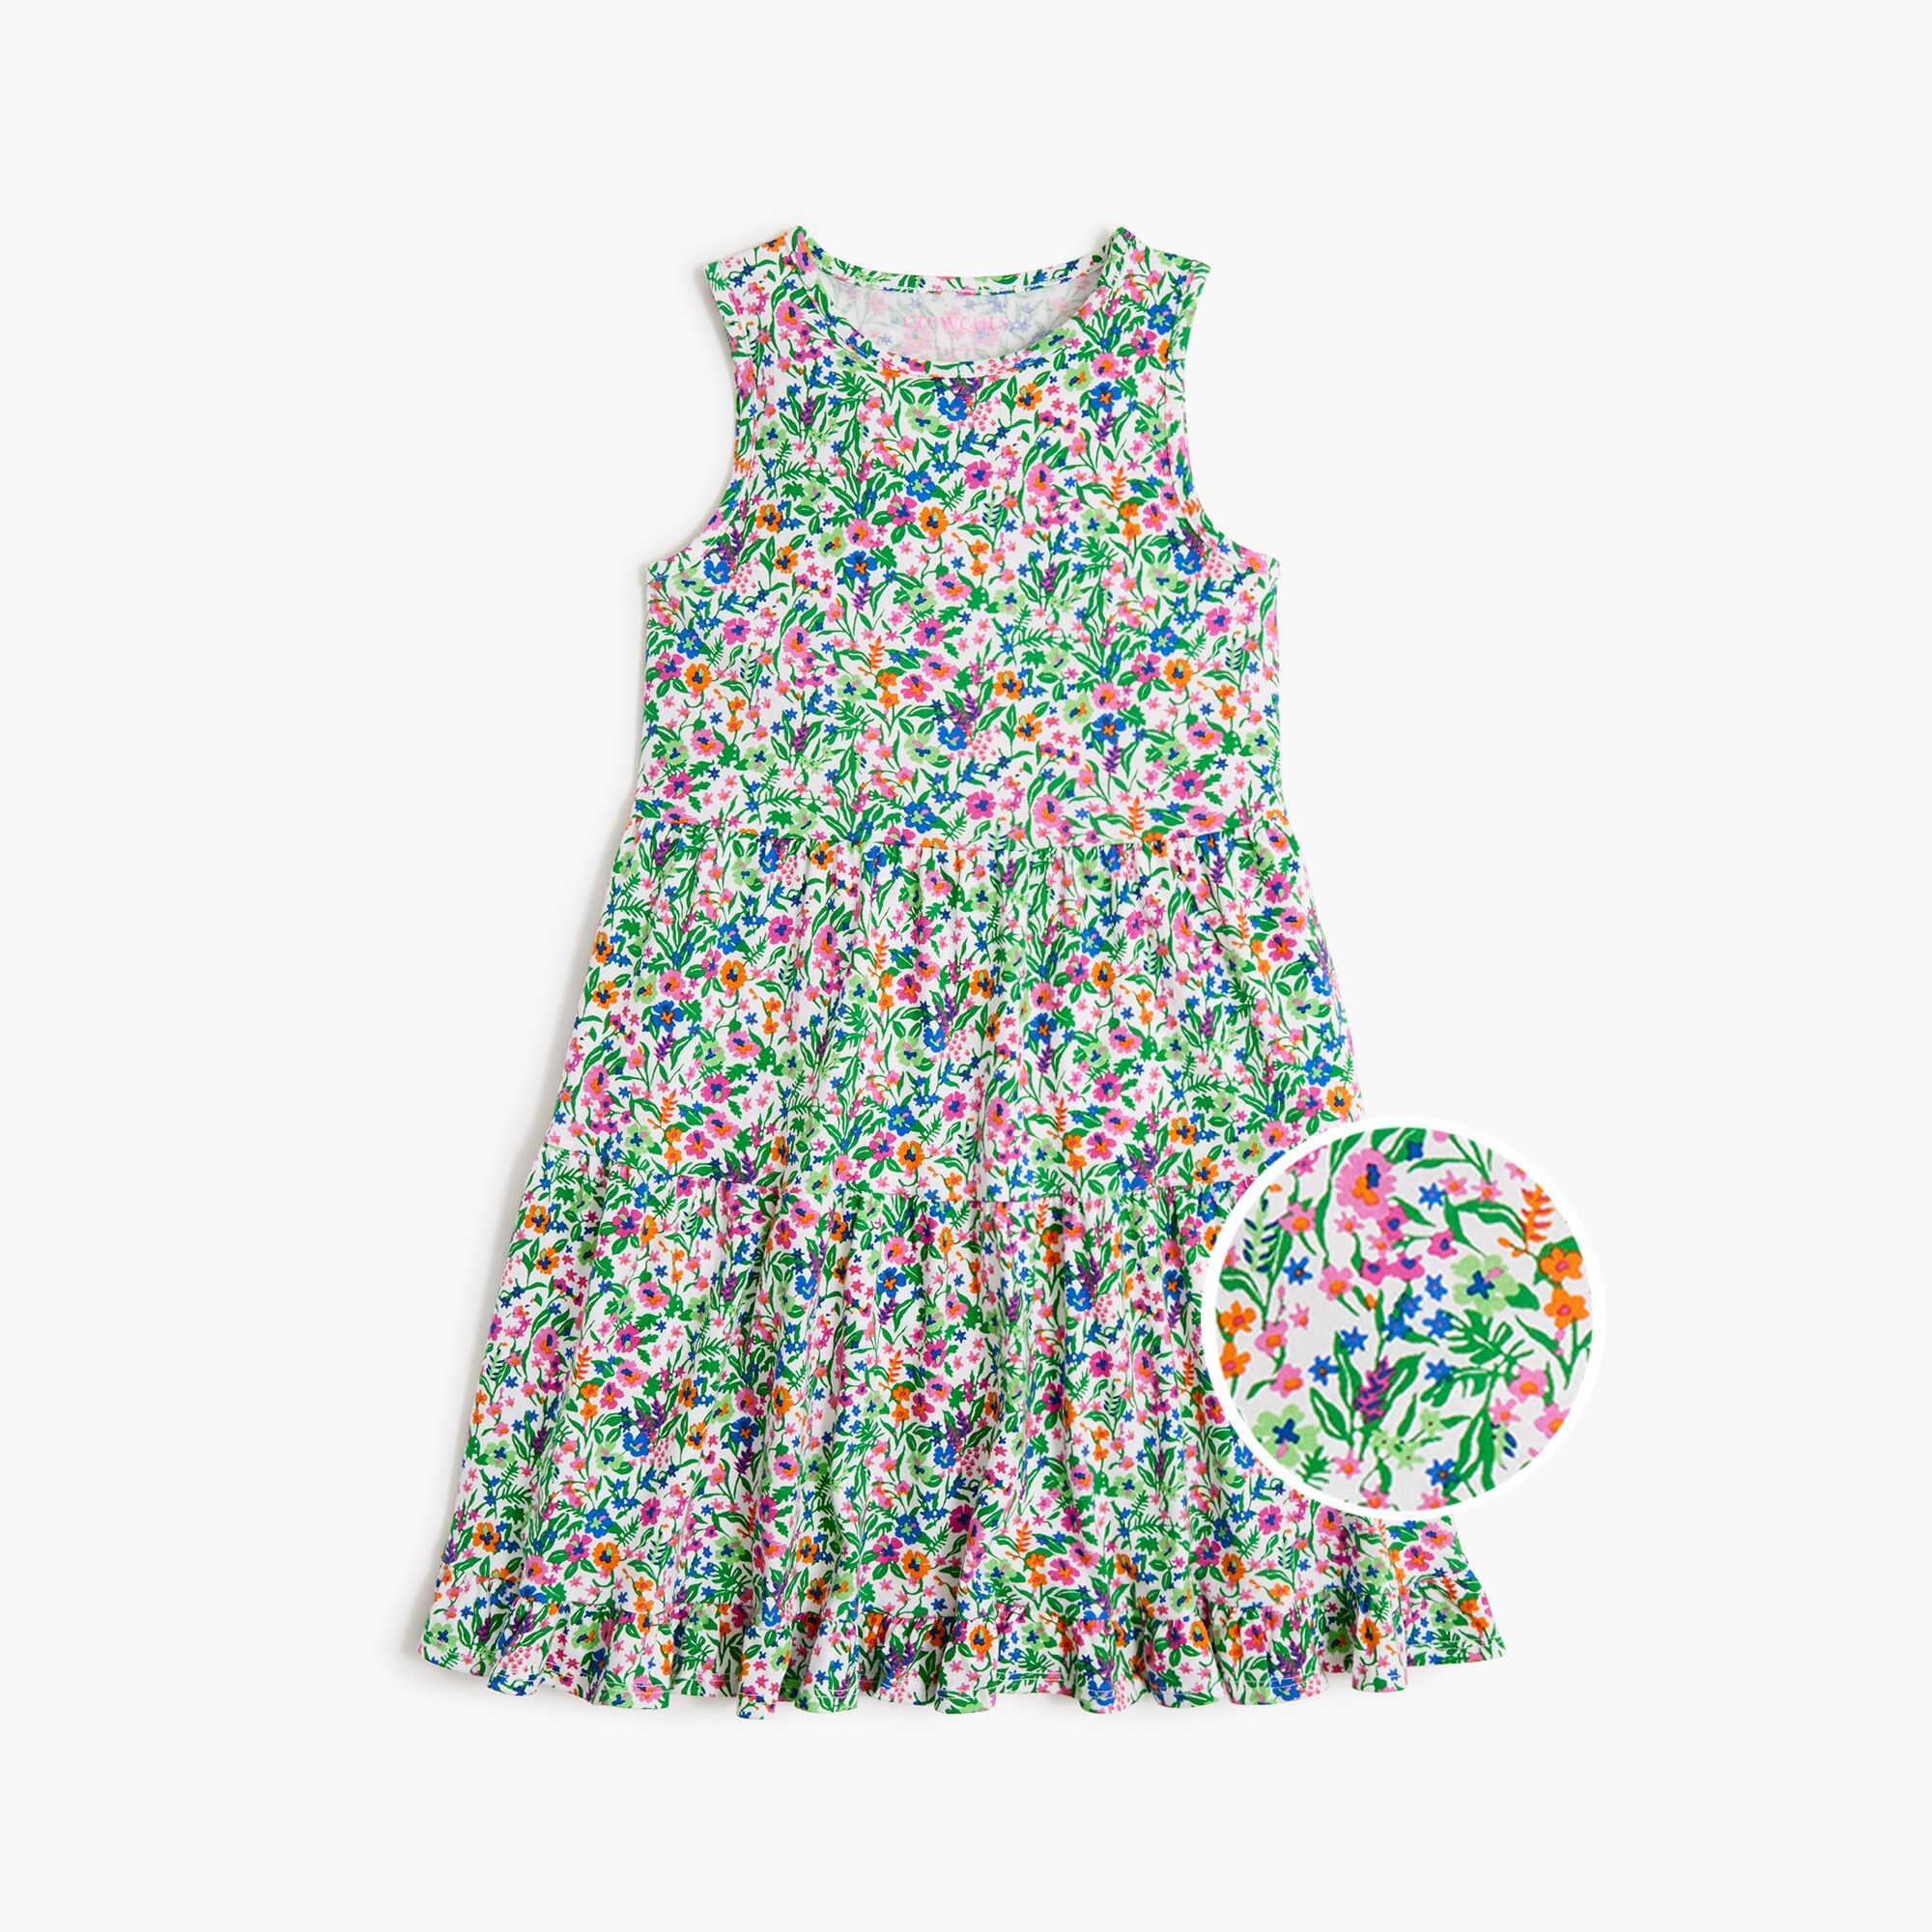  Girls' floral tank dress